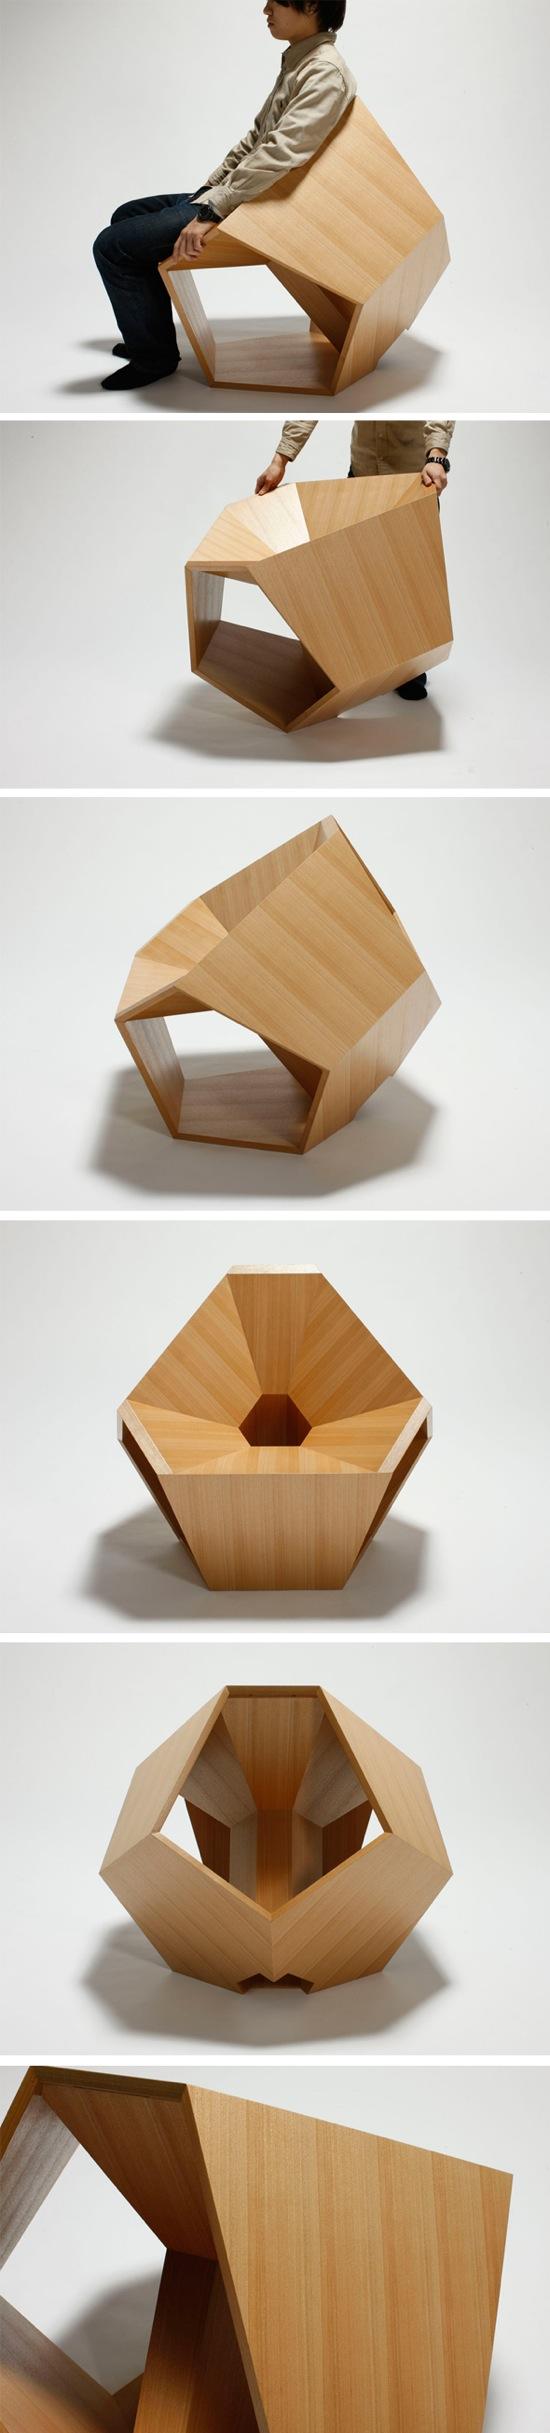 Dodecahedronic Chair - Hiroaki Suzuki - 2